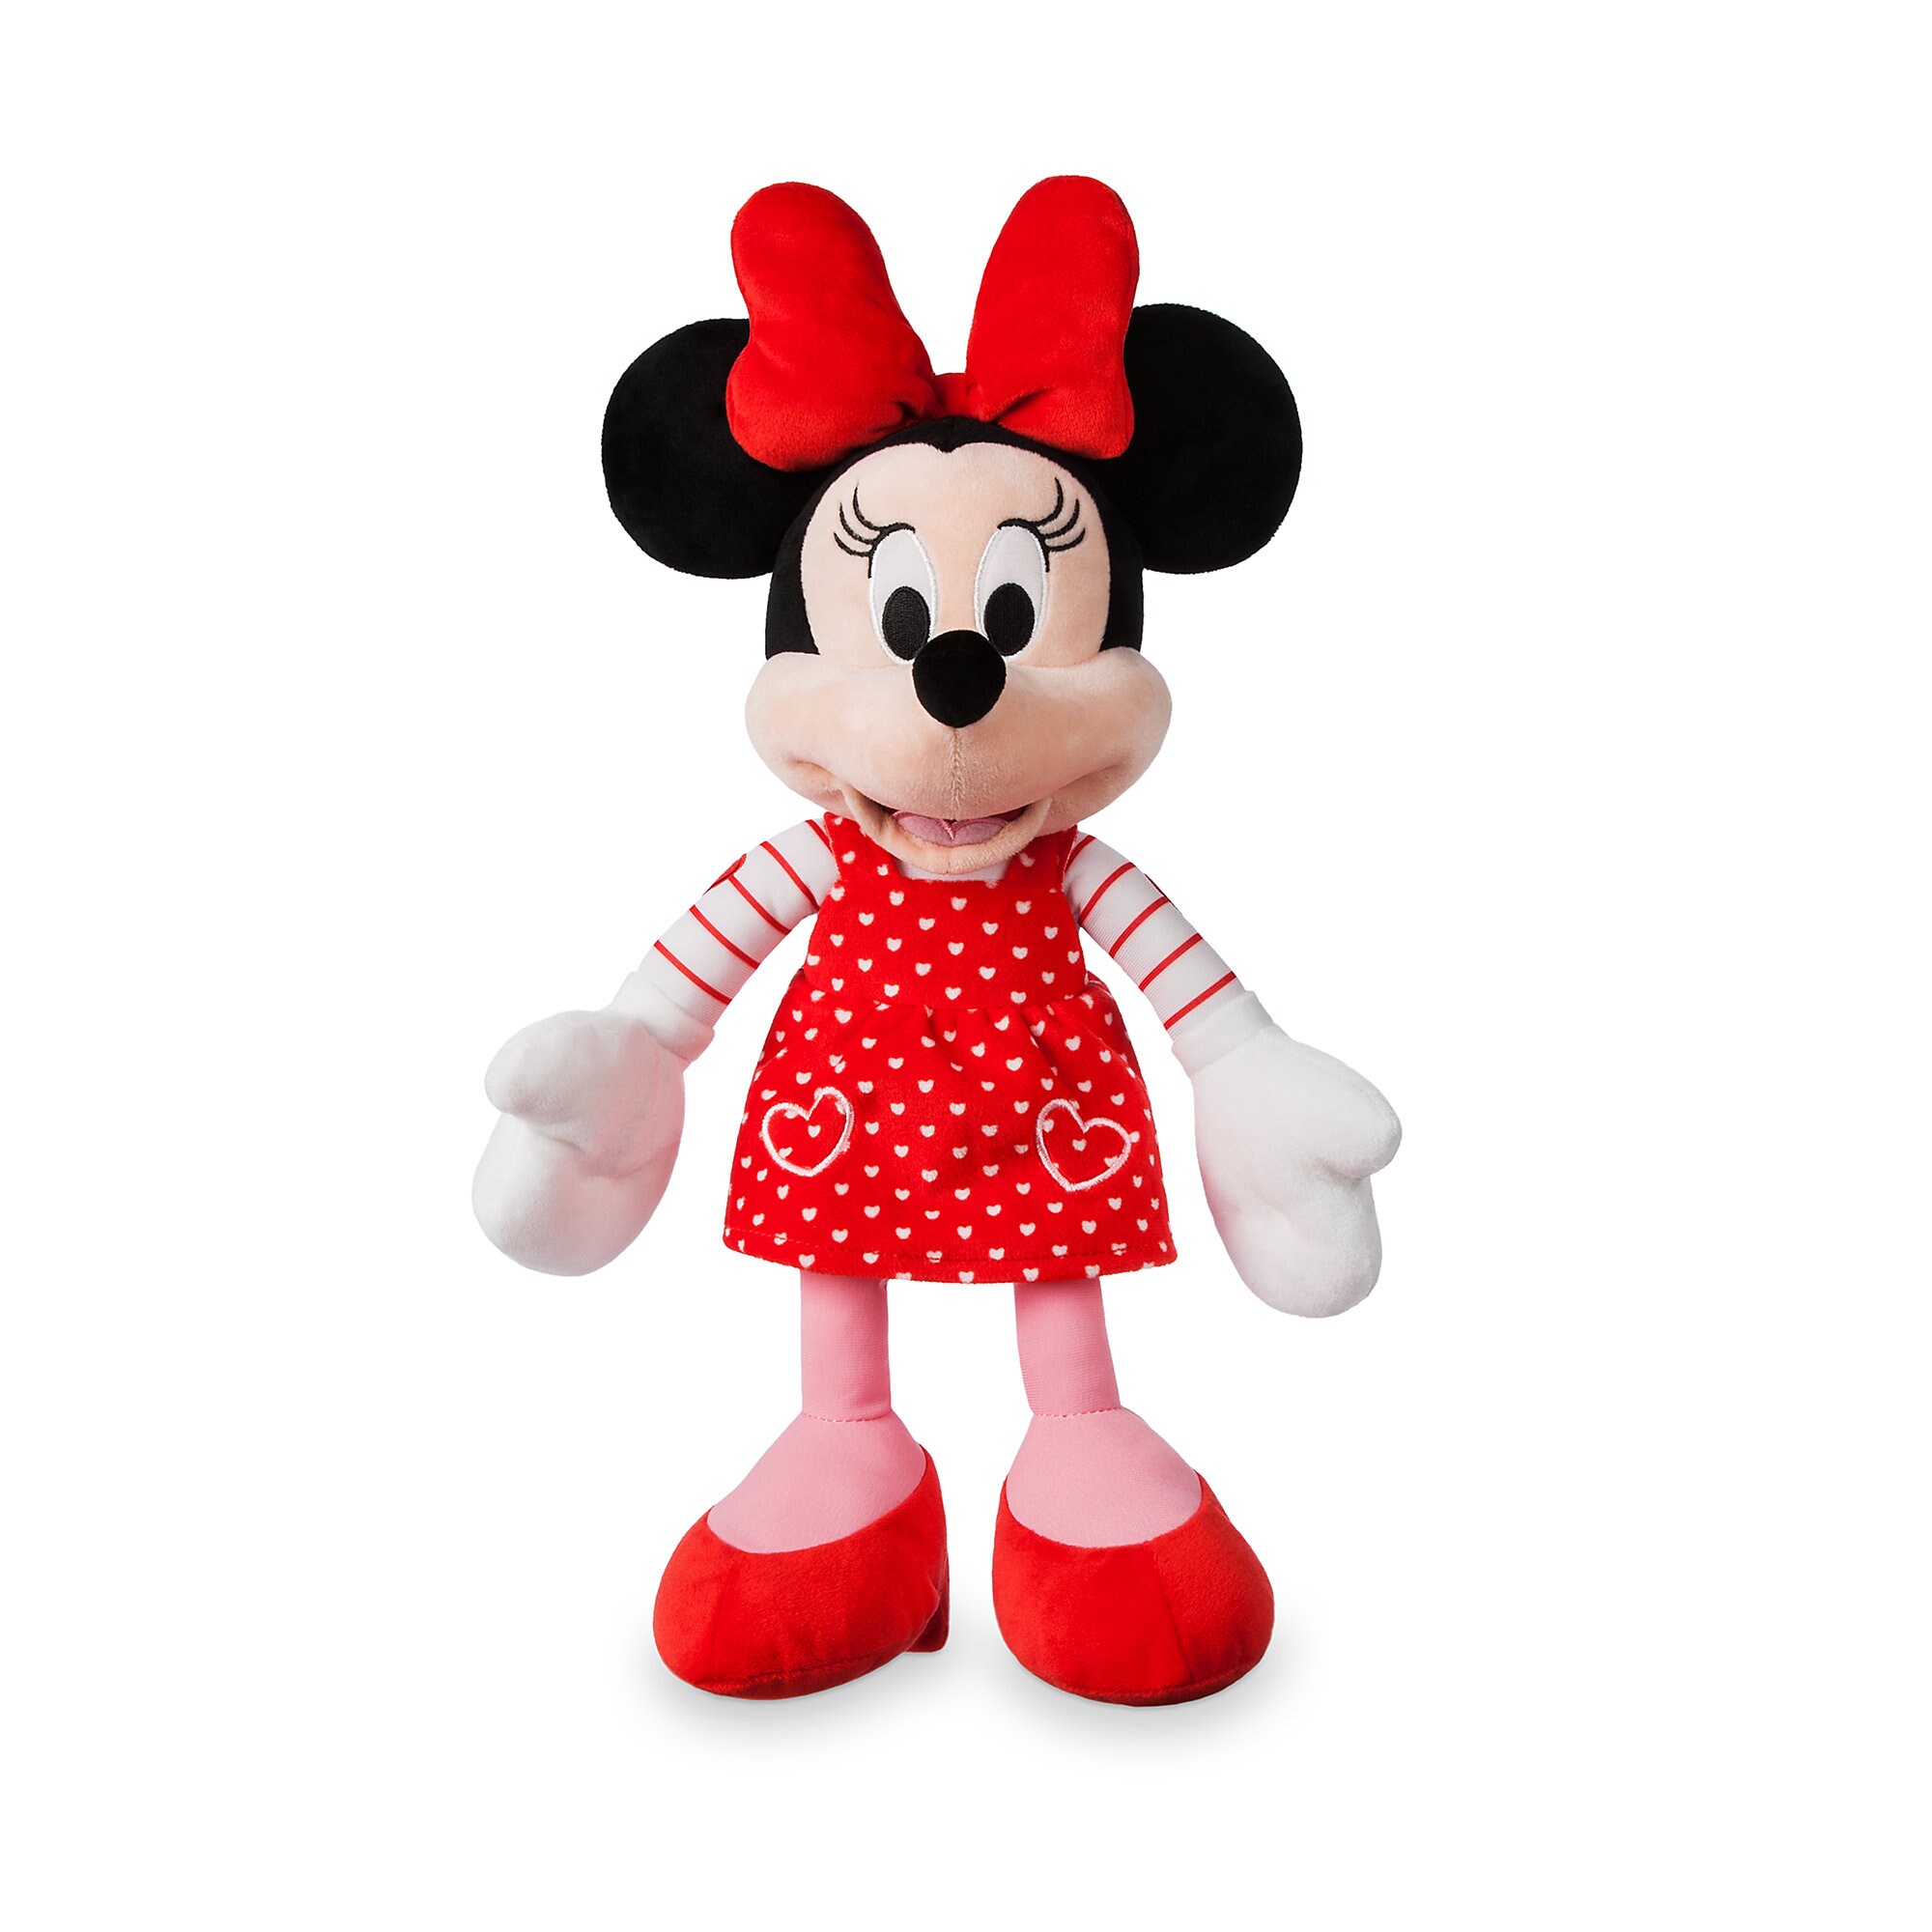 minnie mouse plush doll